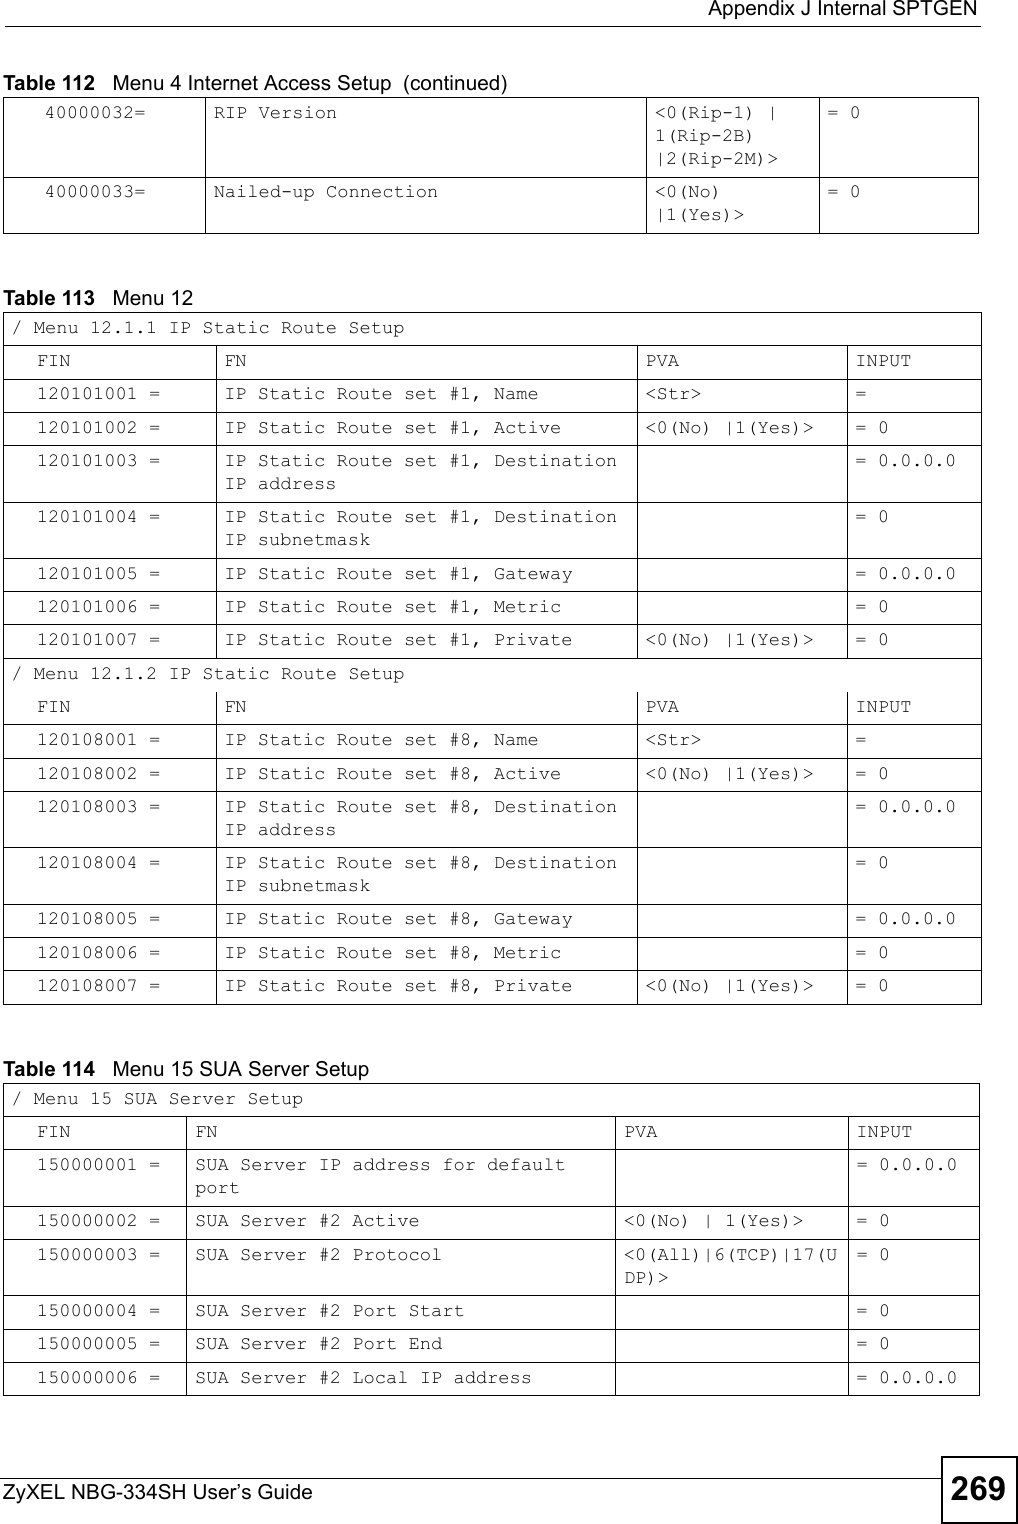  Appendix J Internal SPTGENZyXEL NBG-334SH User’s Guide 26940000032= RIP Version  &lt;0(Rip-1) | 1(Rip-2B) |2(Rip-2M)&gt; = 040000033= Nailed-up Connection  &lt;0(No) |1(Yes)&gt;= 0Table 112   Menu 4 Internet Access Setup  (continued)Table 113   Menu 12 / Menu 12.1.1 IP Static Route SetupFIN FN PVA INPUT120101001 = IP Static Route set #1, Name  &lt;Str&gt; =120101002 = IP Static Route set #1, Active &lt;0(No) |1(Yes)&gt;  = 0120101003 = IP Static Route set #1, Destination IP address = 0.0.0.0120101004 = IP Static Route set #1, Destination IP subnetmask = 0120101005 = IP Static Route set #1, Gateway  = 0.0.0.0120101006 = IP Static Route set #1, Metric  = 0120101007 = IP Static Route set #1, Private &lt;0(No) |1(Yes)&gt;  = 0/ Menu 12.1.2 IP Static Route Setup FIN FN PVA INPUT120108001 = IP Static Route set #8, Name &lt;Str&gt; =120108002 = IP Static Route set #8, Active  &lt;0(No) |1(Yes)&gt;  = 0120108003 = IP Static Route set #8, Destination IP address = 0.0.0.0120108004 = IP Static Route set #8, Destination IP subnetmask = 0120108005 = IP Static Route set #8, Gateway  = 0.0.0.0120108006 = IP Static Route set #8, Metric  = 0120108007 = IP Static Route set #8, Private &lt;0(No) |1(Yes)&gt; = 0Table 114   Menu 15 SUA Server Setup / Menu 15 SUA Server SetupFIN FN PVA INPUT150000001 = SUA Server IP address for default port = 0.0.0.0150000002 = SUA Server #2 Active  &lt;0(No) | 1(Yes)&gt;  = 0150000003 = SUA Server #2 Protocol &lt;0(All)|6(TCP)|17(UDP)&gt;= 0150000004 = SUA Server #2 Port Start  = 0150000005 = SUA Server #2 Port End    = 0150000006 = SUA Server #2 Local IP address  = 0.0.0.0